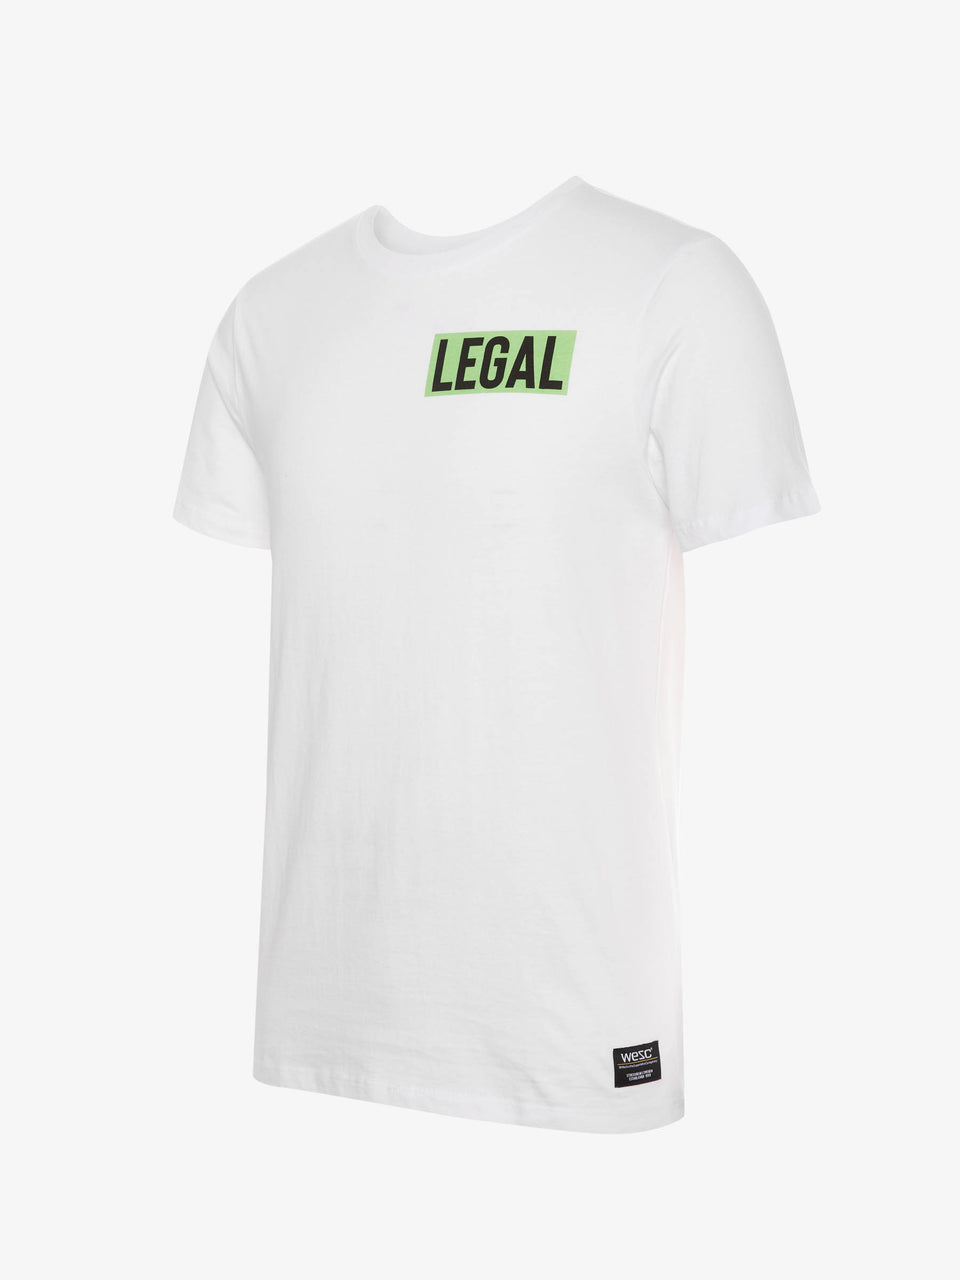 WeSC_Mason_Legal_T-Shirt_White